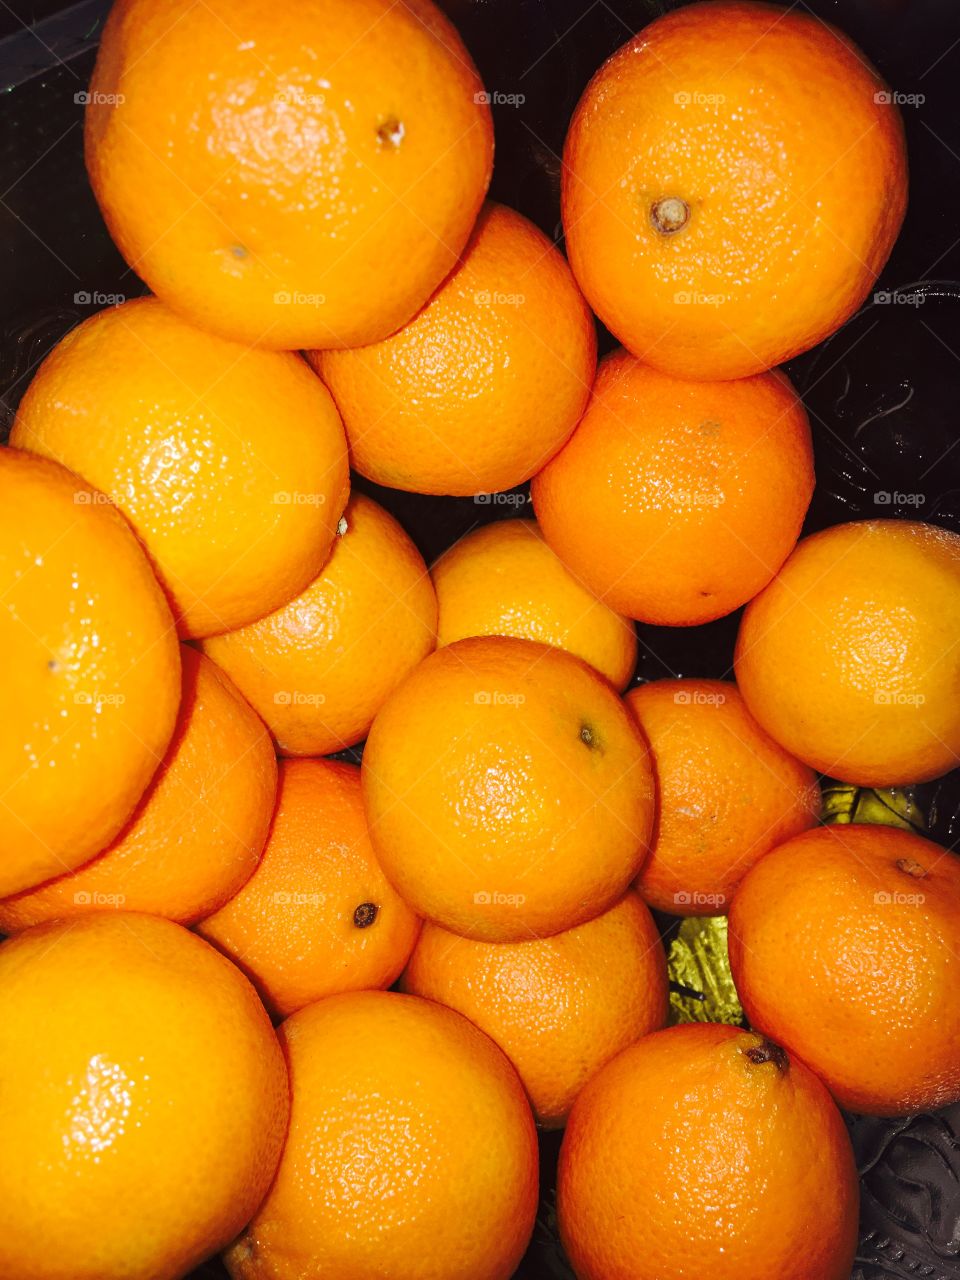 Fresh. Healthy. Mandarins. Fruit. Texture. Imagination.